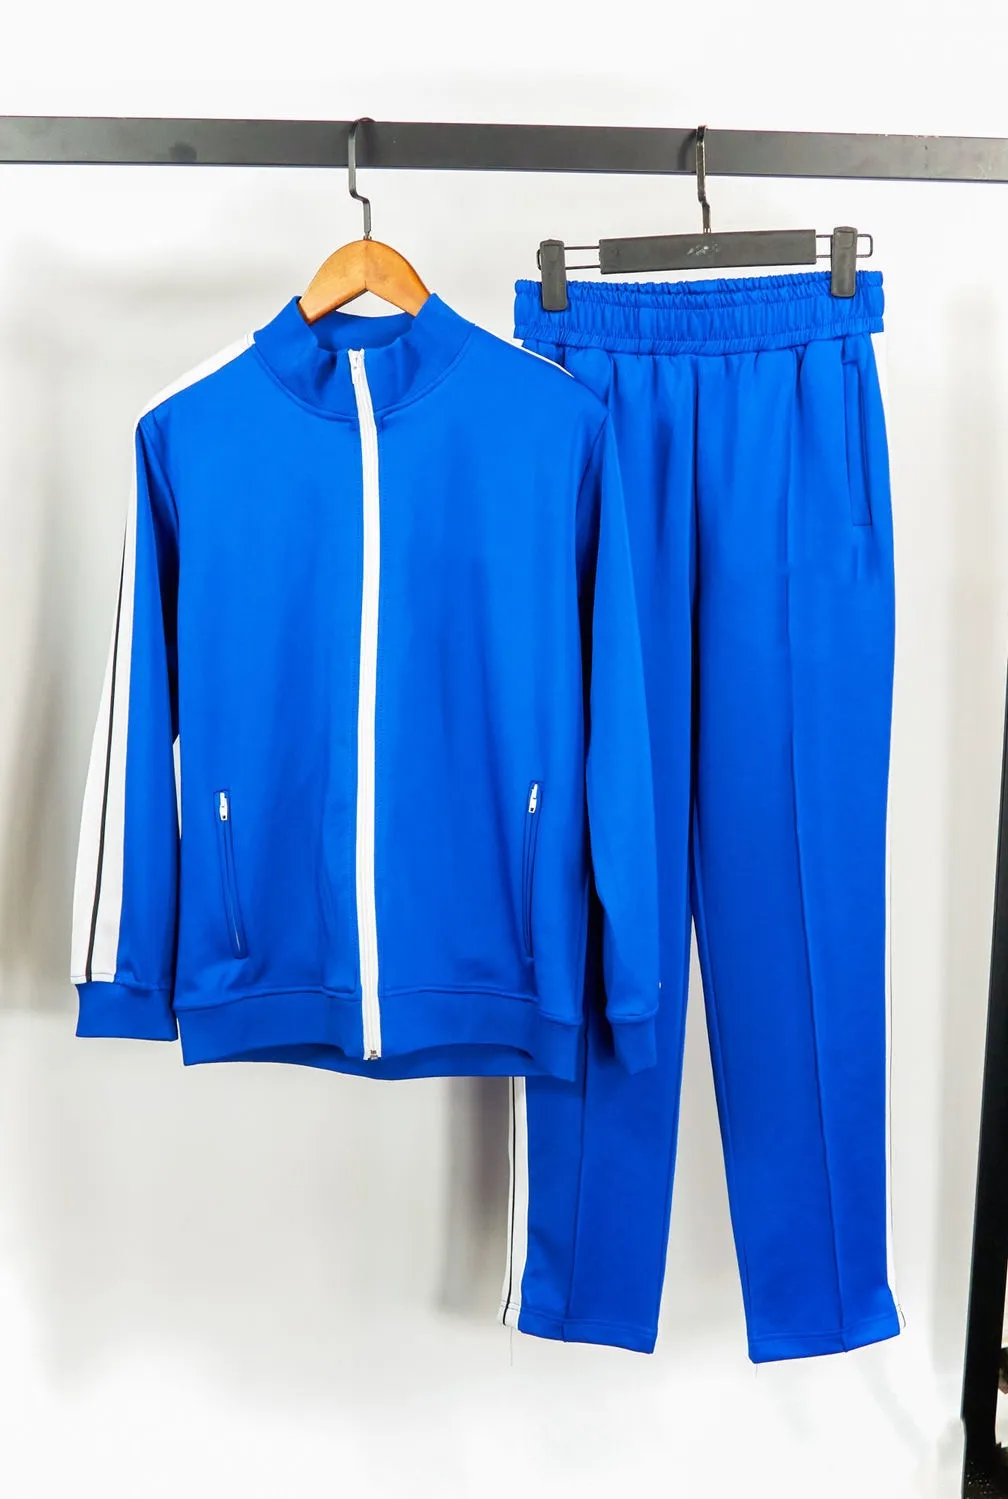 Designer Tech Fleece Tracksuit Set for Men and Women, Letter Printed Zip Long Sleeve Jacket & Sweatpants, EU S-XL